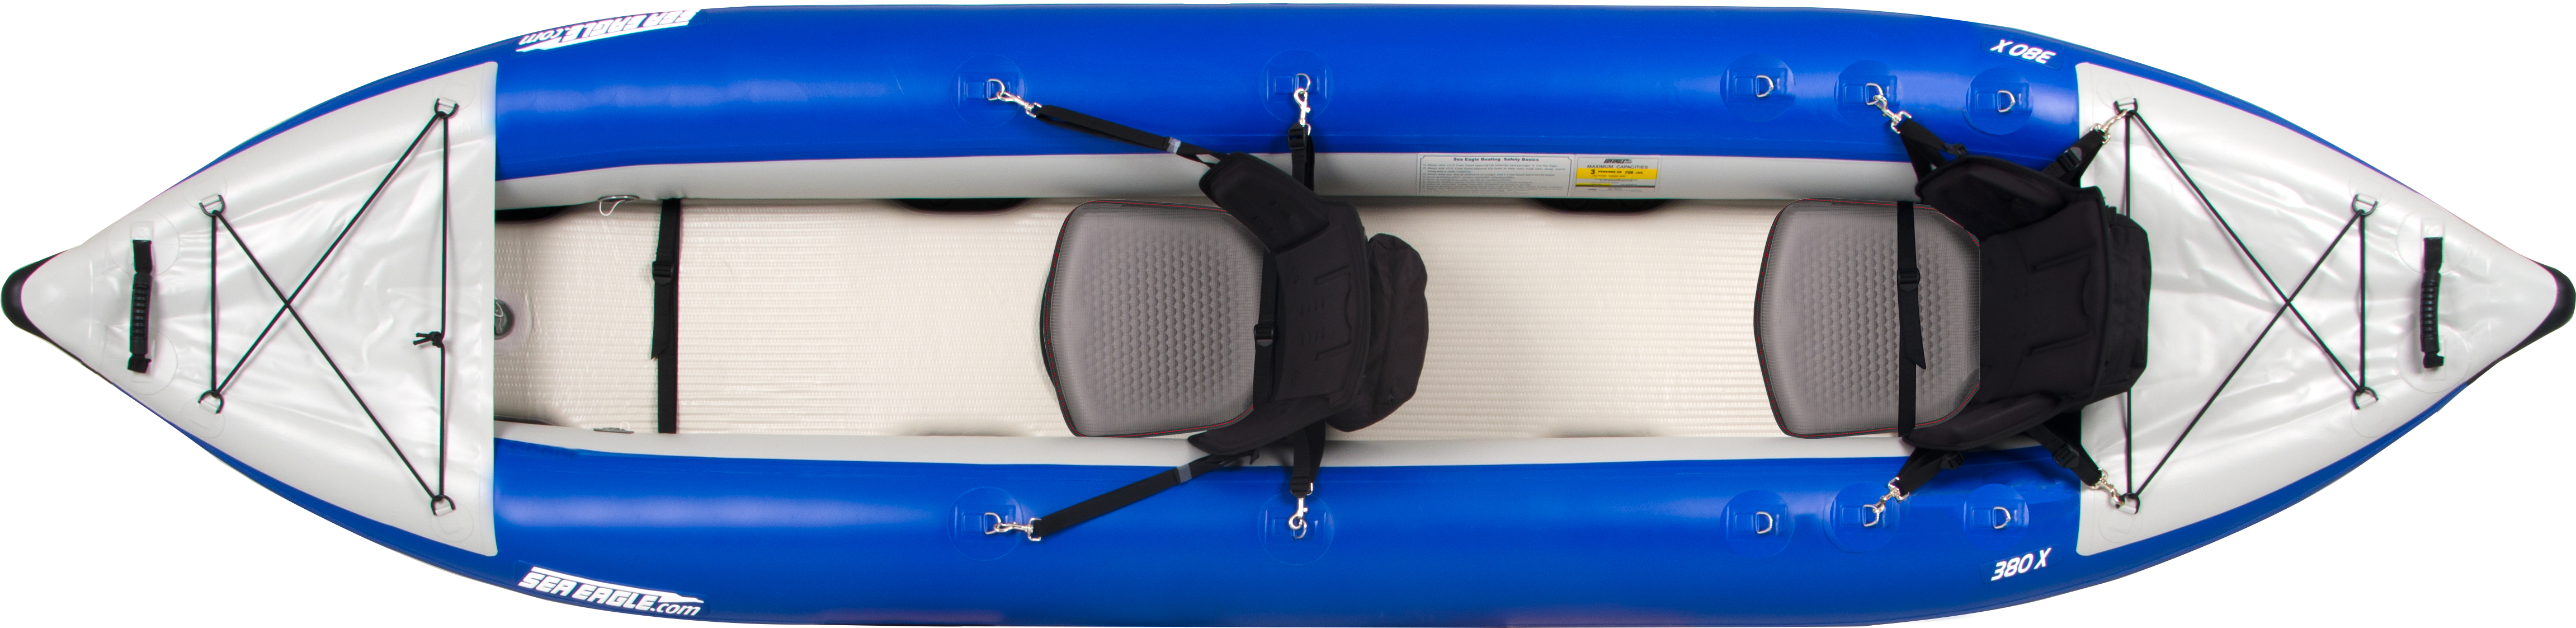 Kayaks: Explorer 380x by Sea Eagle - Image 4489